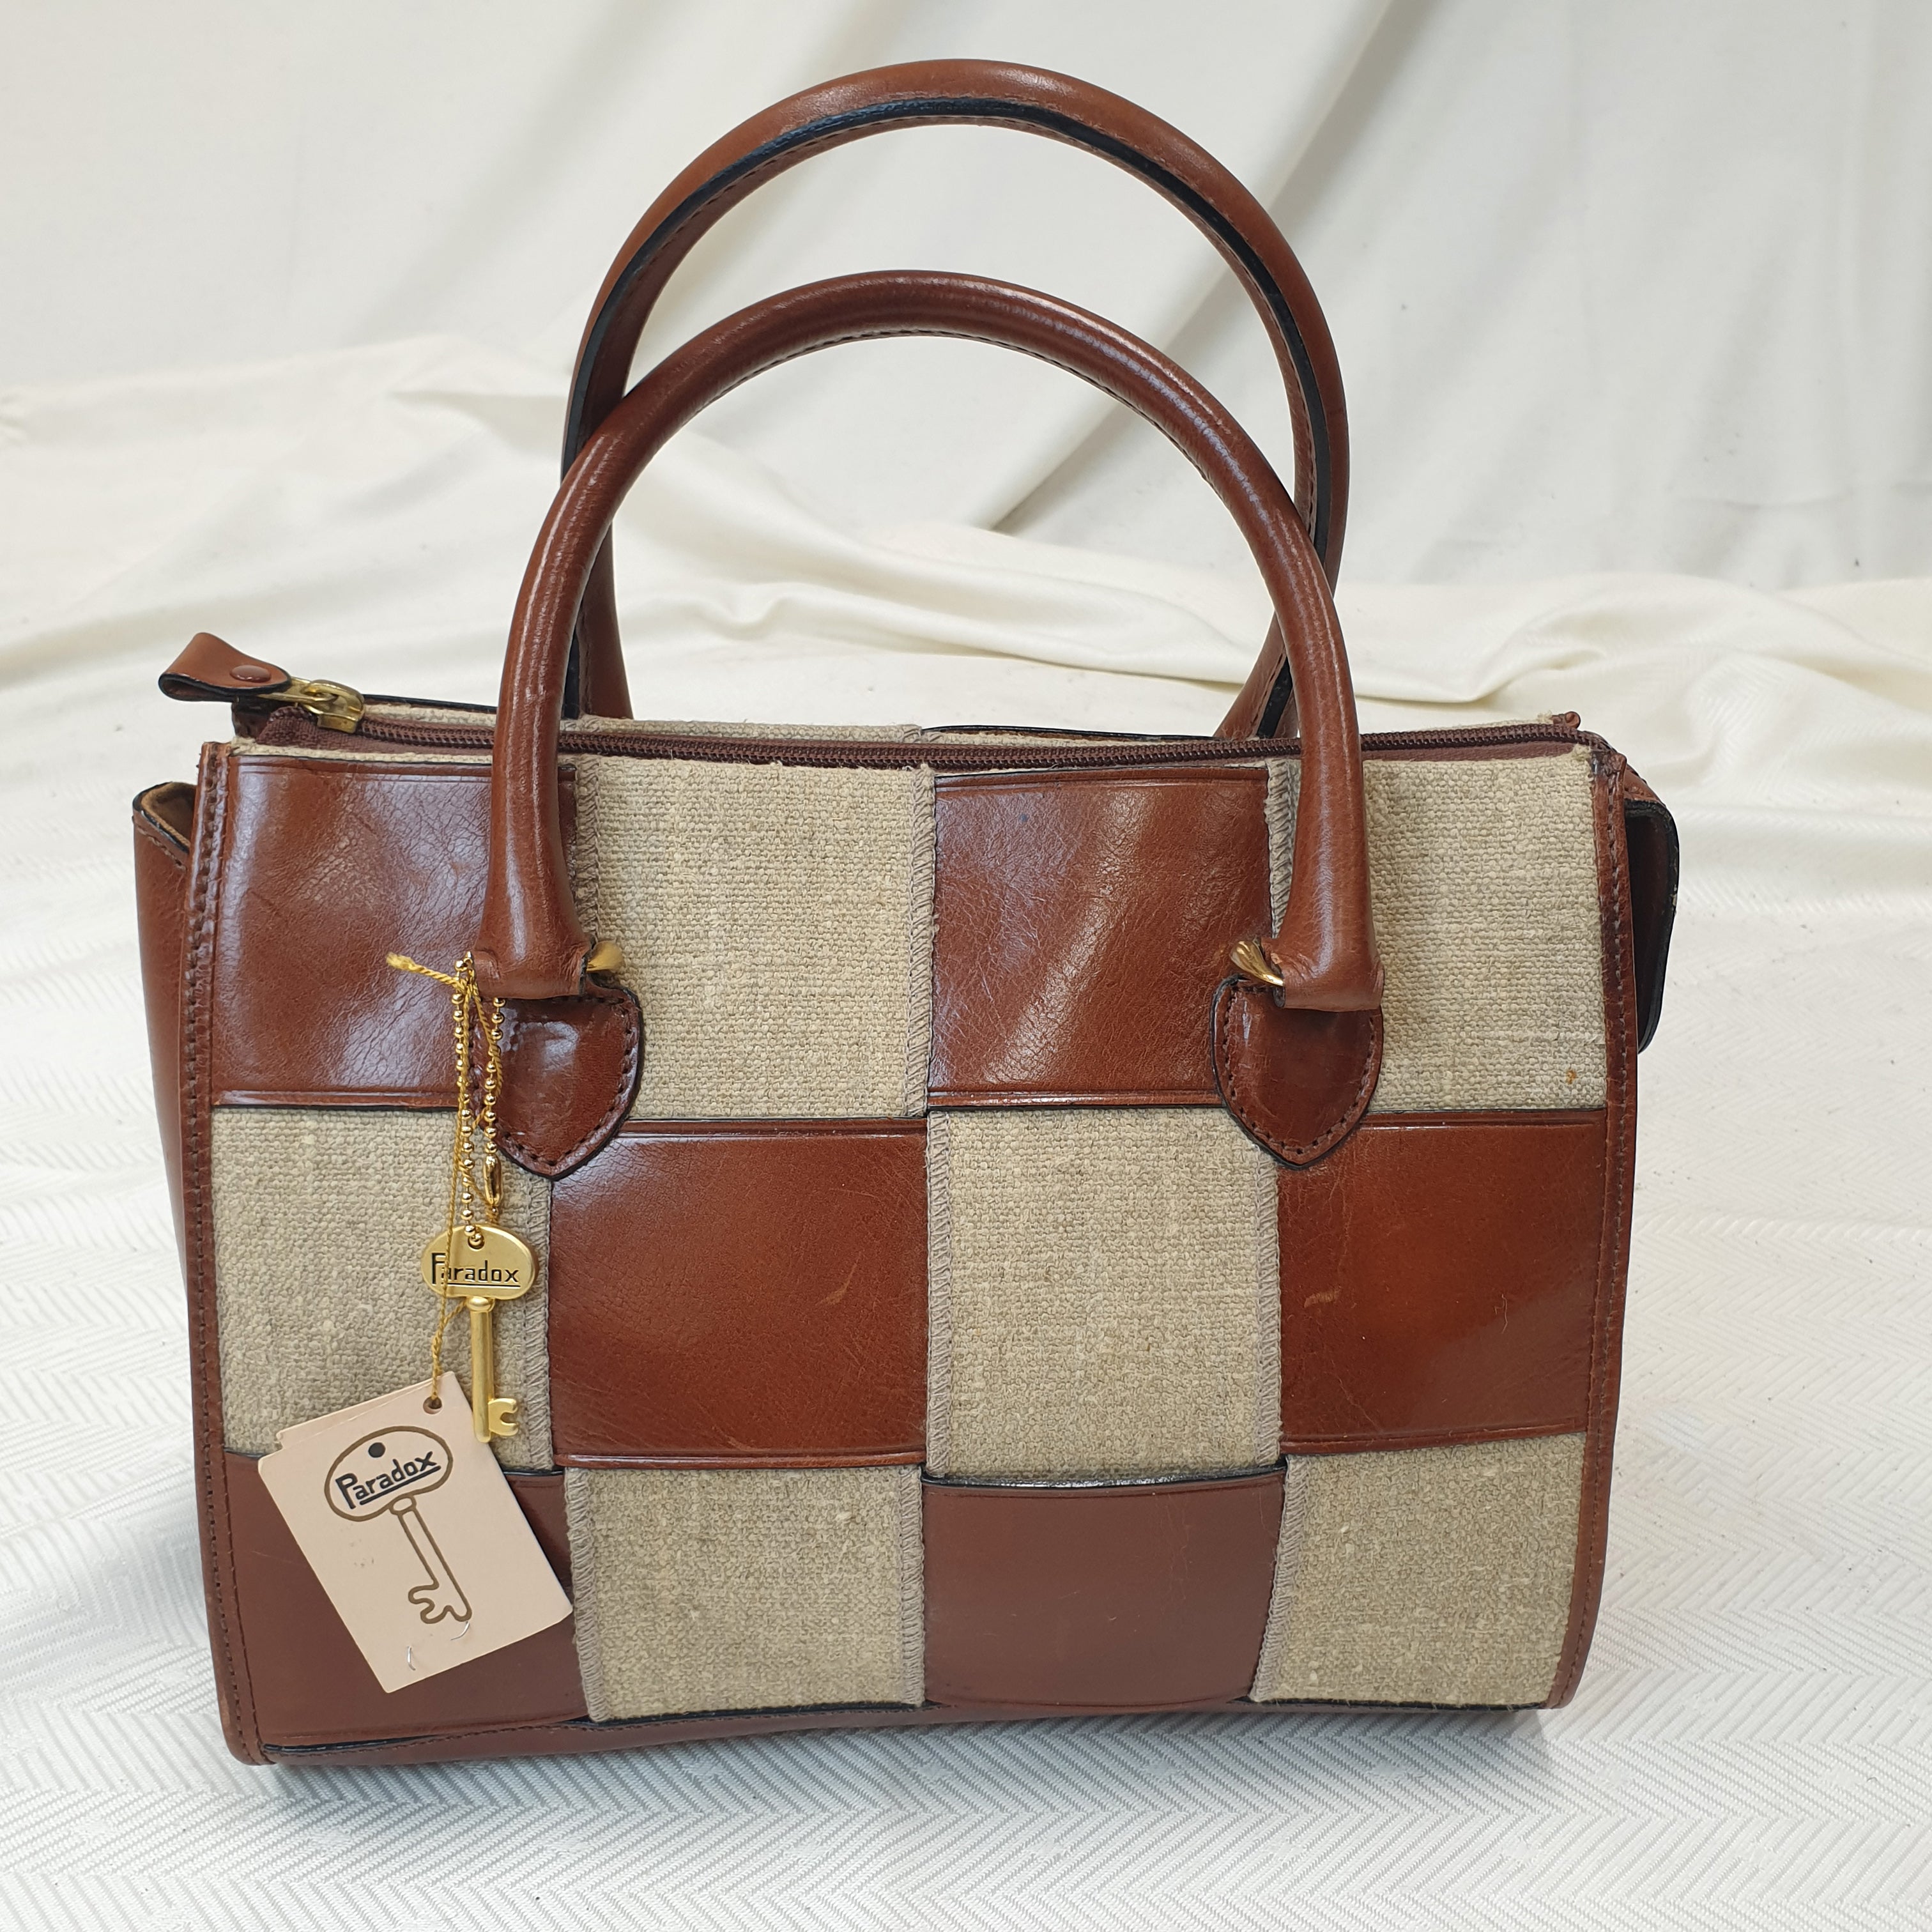 Linnen & Leather Patchwork Handbag